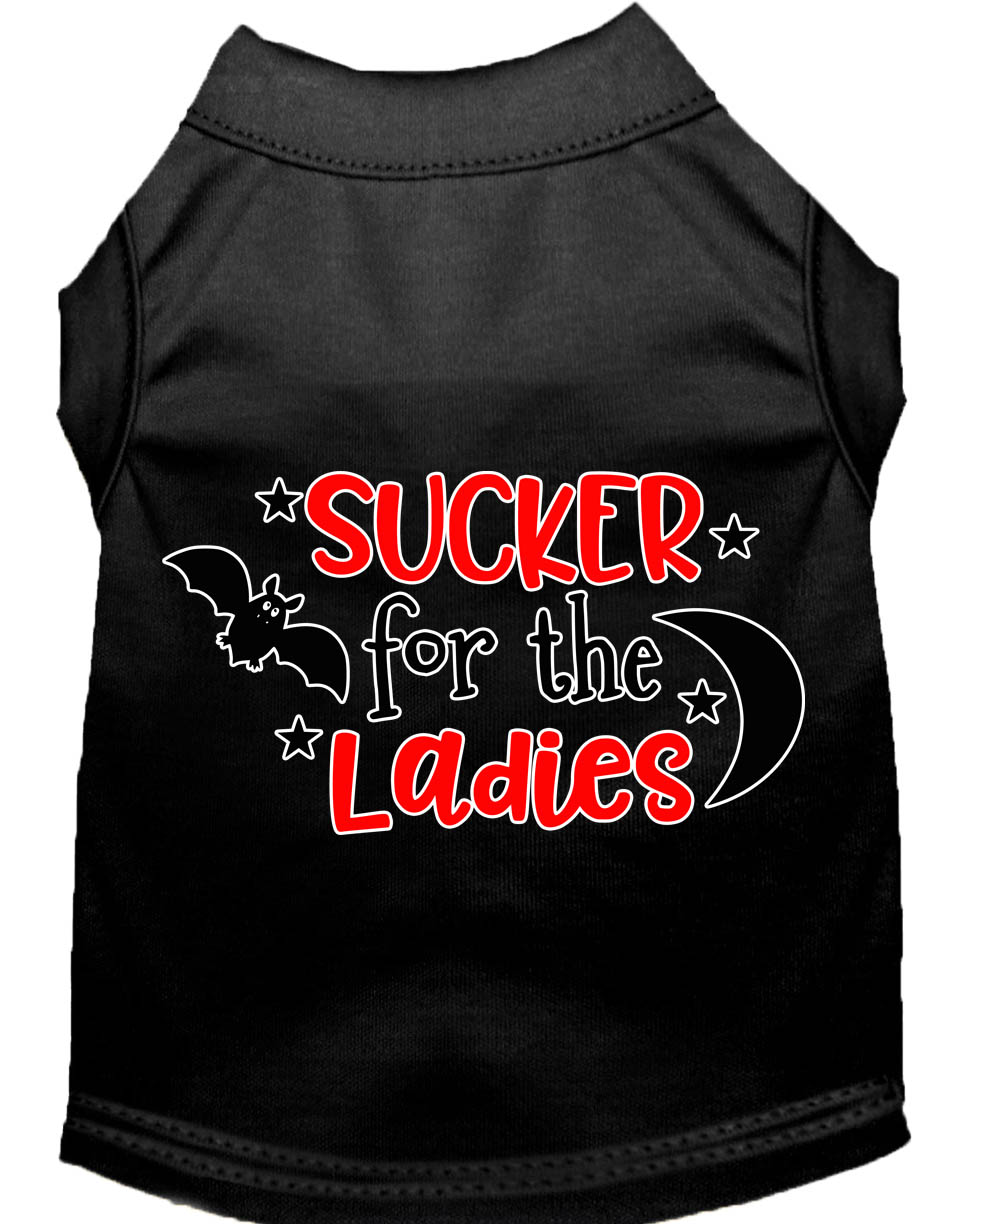 Sucker for the Ladies Screen Print Dog Shirt Black Lg